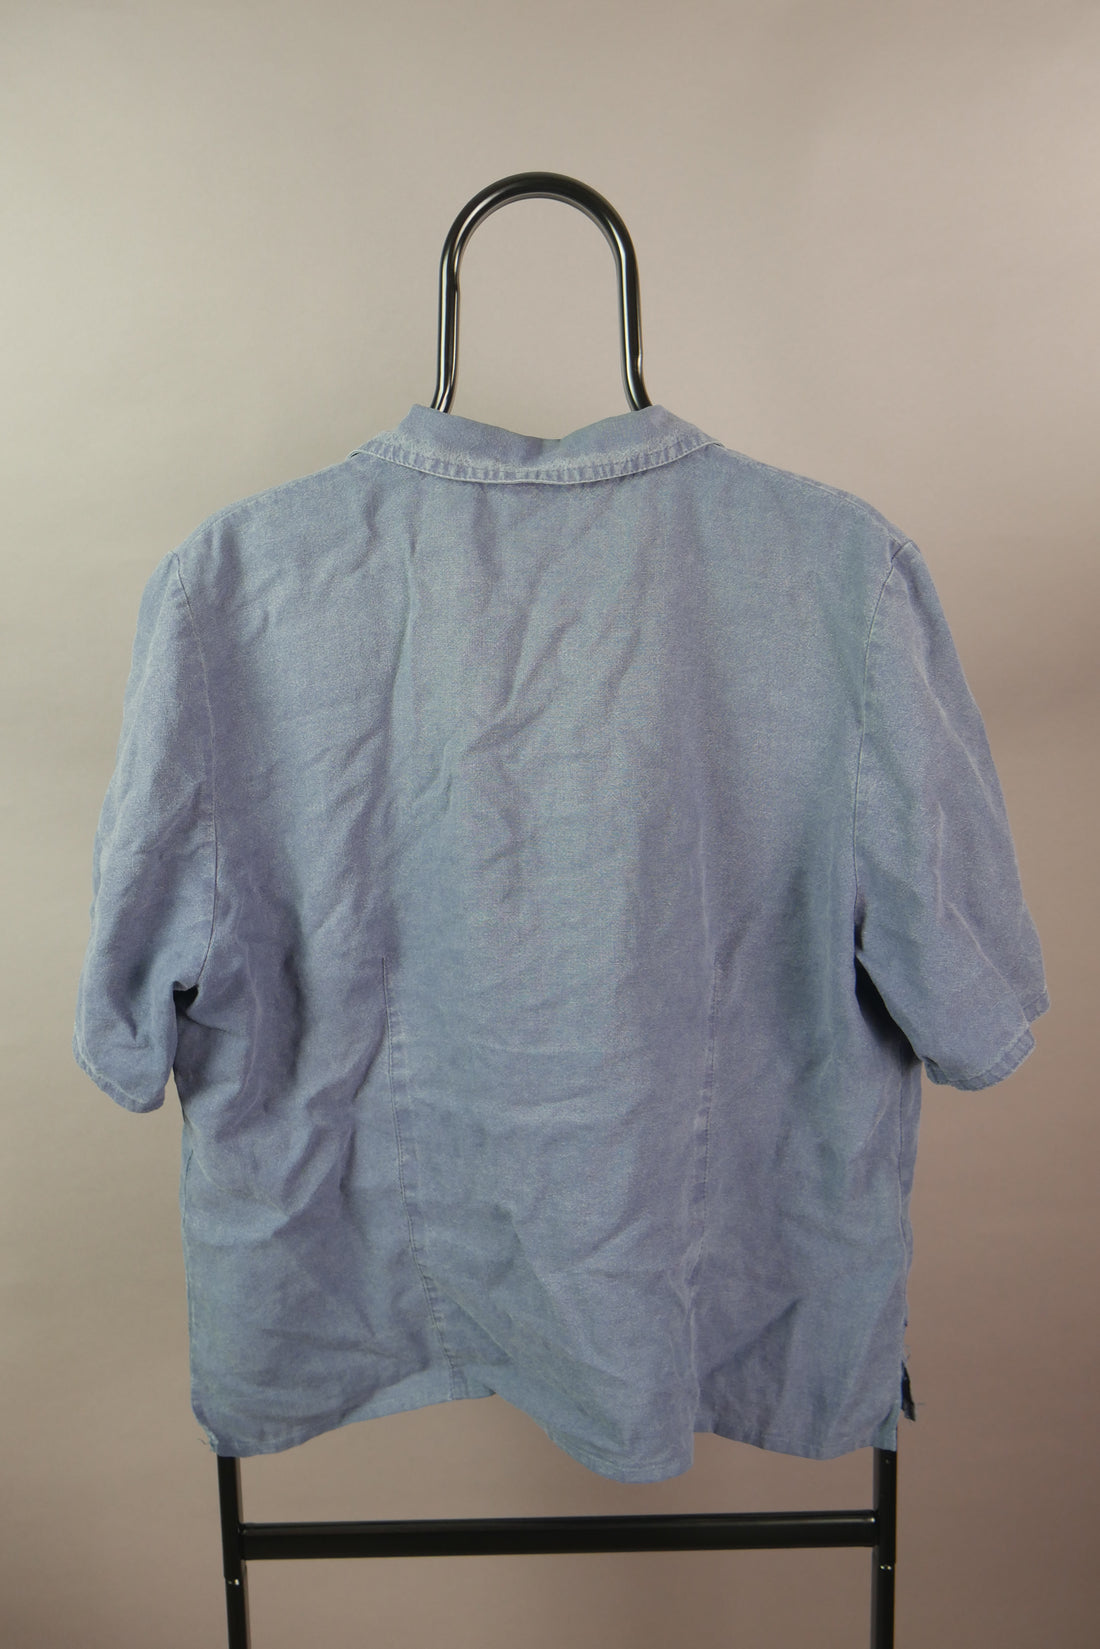 The Vintage Short Sleeve Shirt (14)